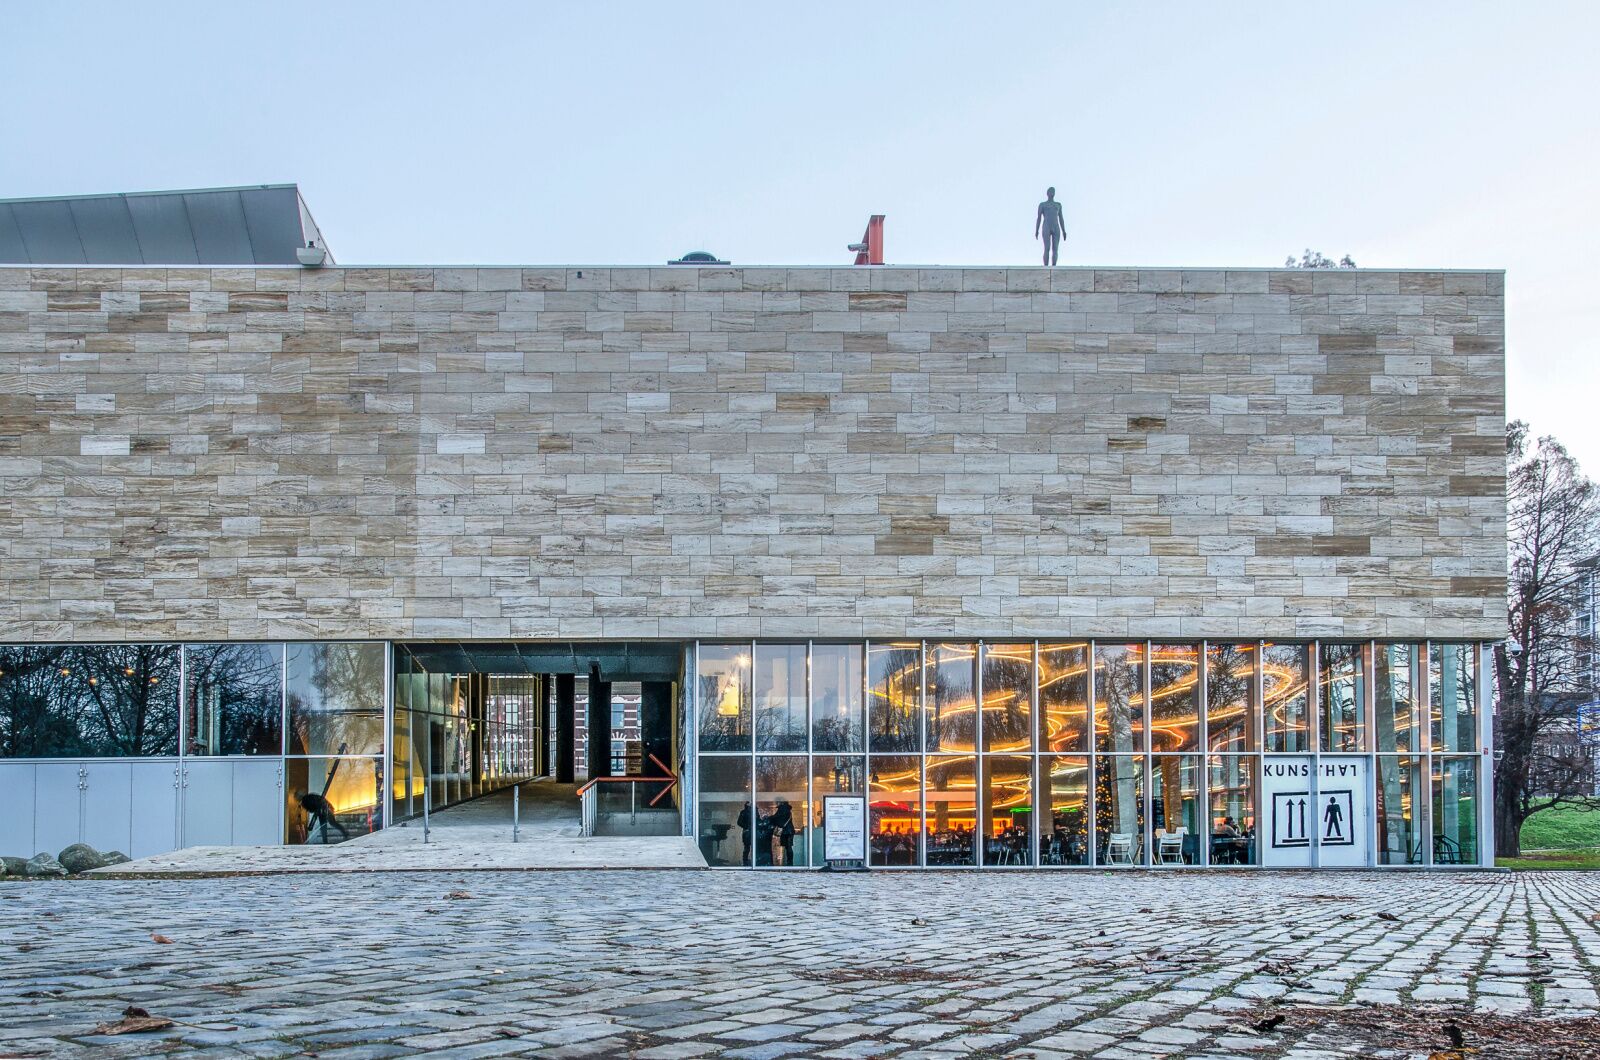 kunsthal museum - rotterdam museums facade 